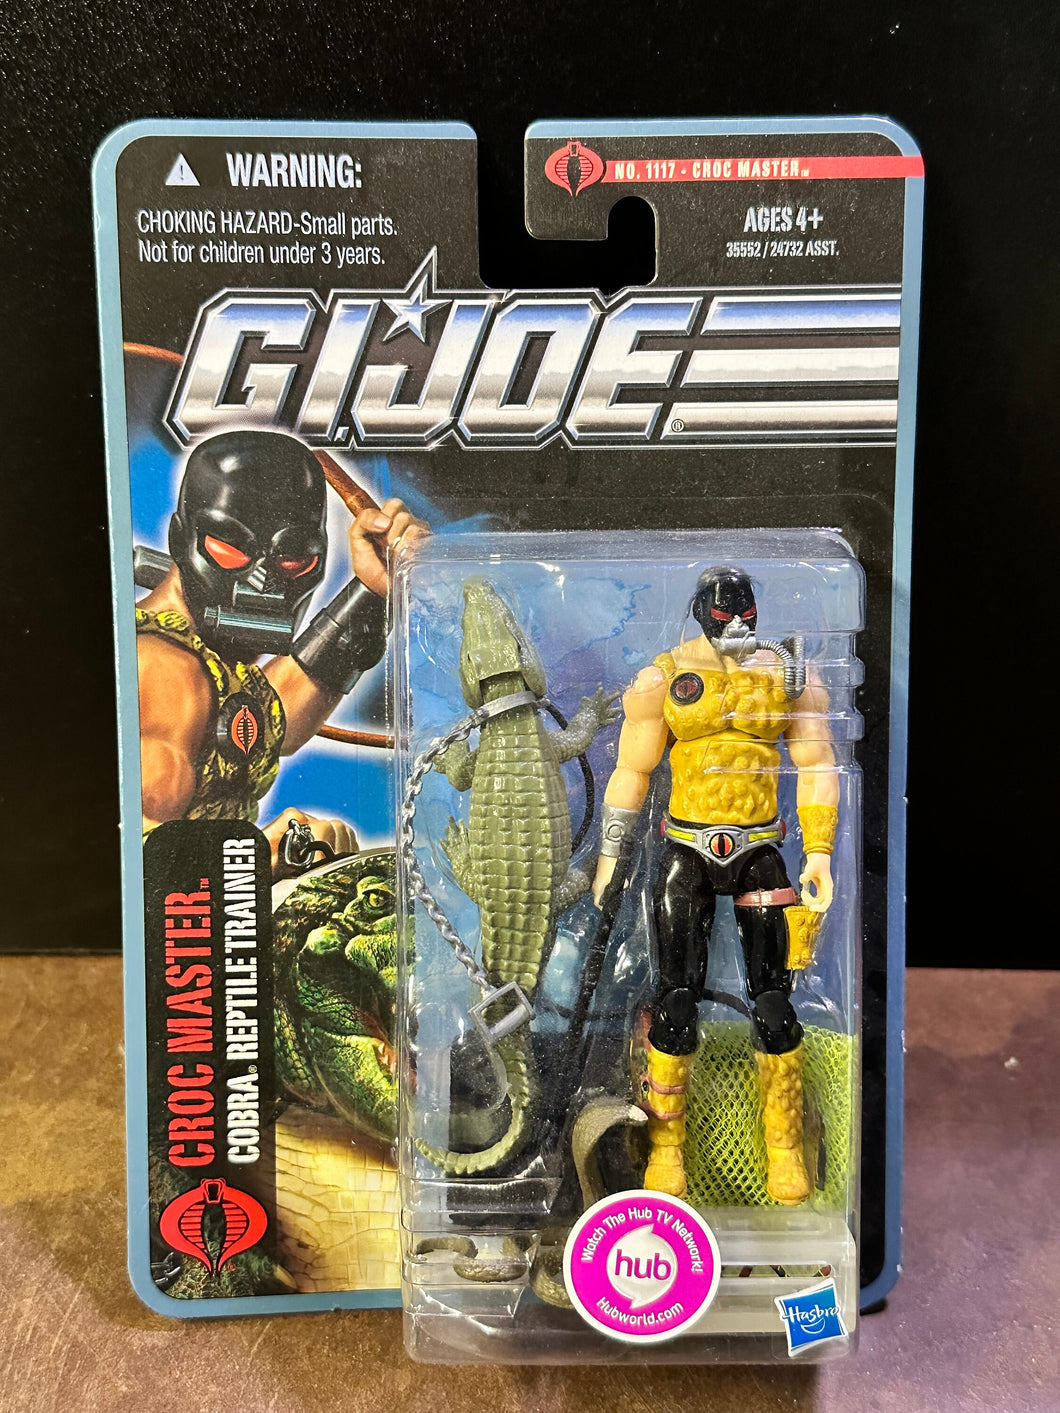 Gi Joe Pursuit of Cobra Croc Master Action Figure